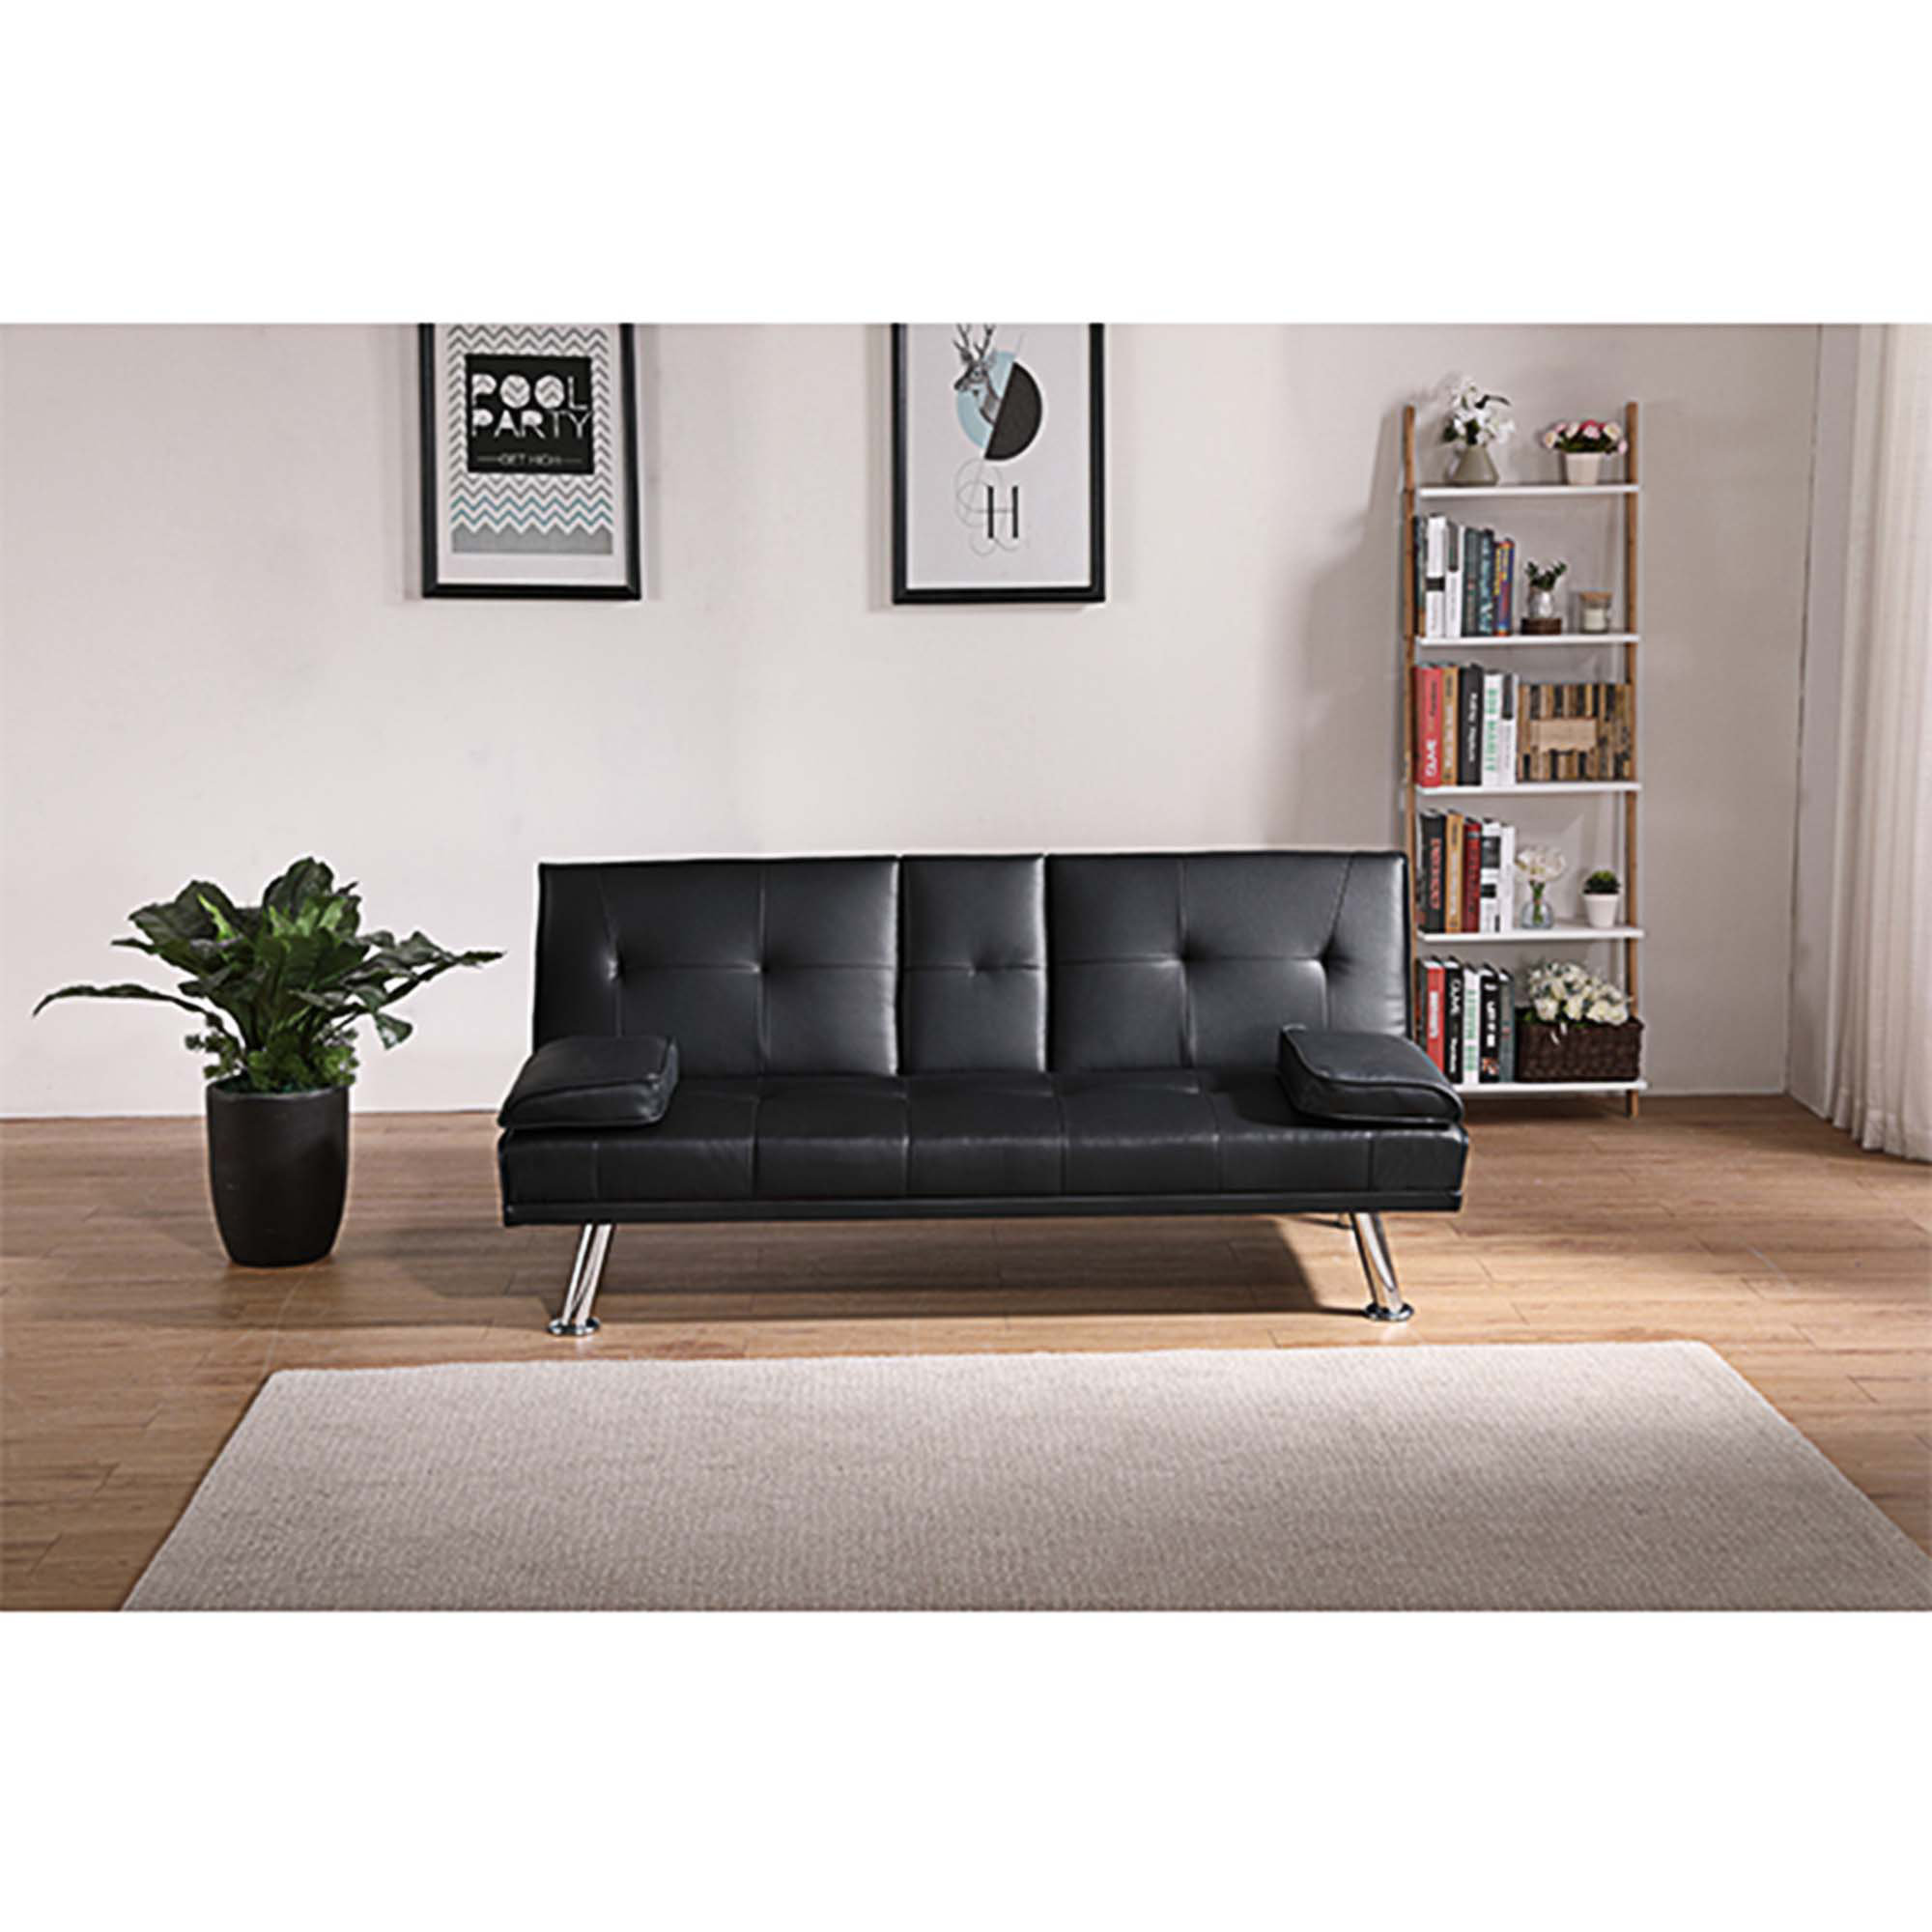 Homall Convertible Futon Sofa Bed Couch Upholstered Sleeper Sofa Angle  Adjustable Lounge Sofa,Dark Gray 